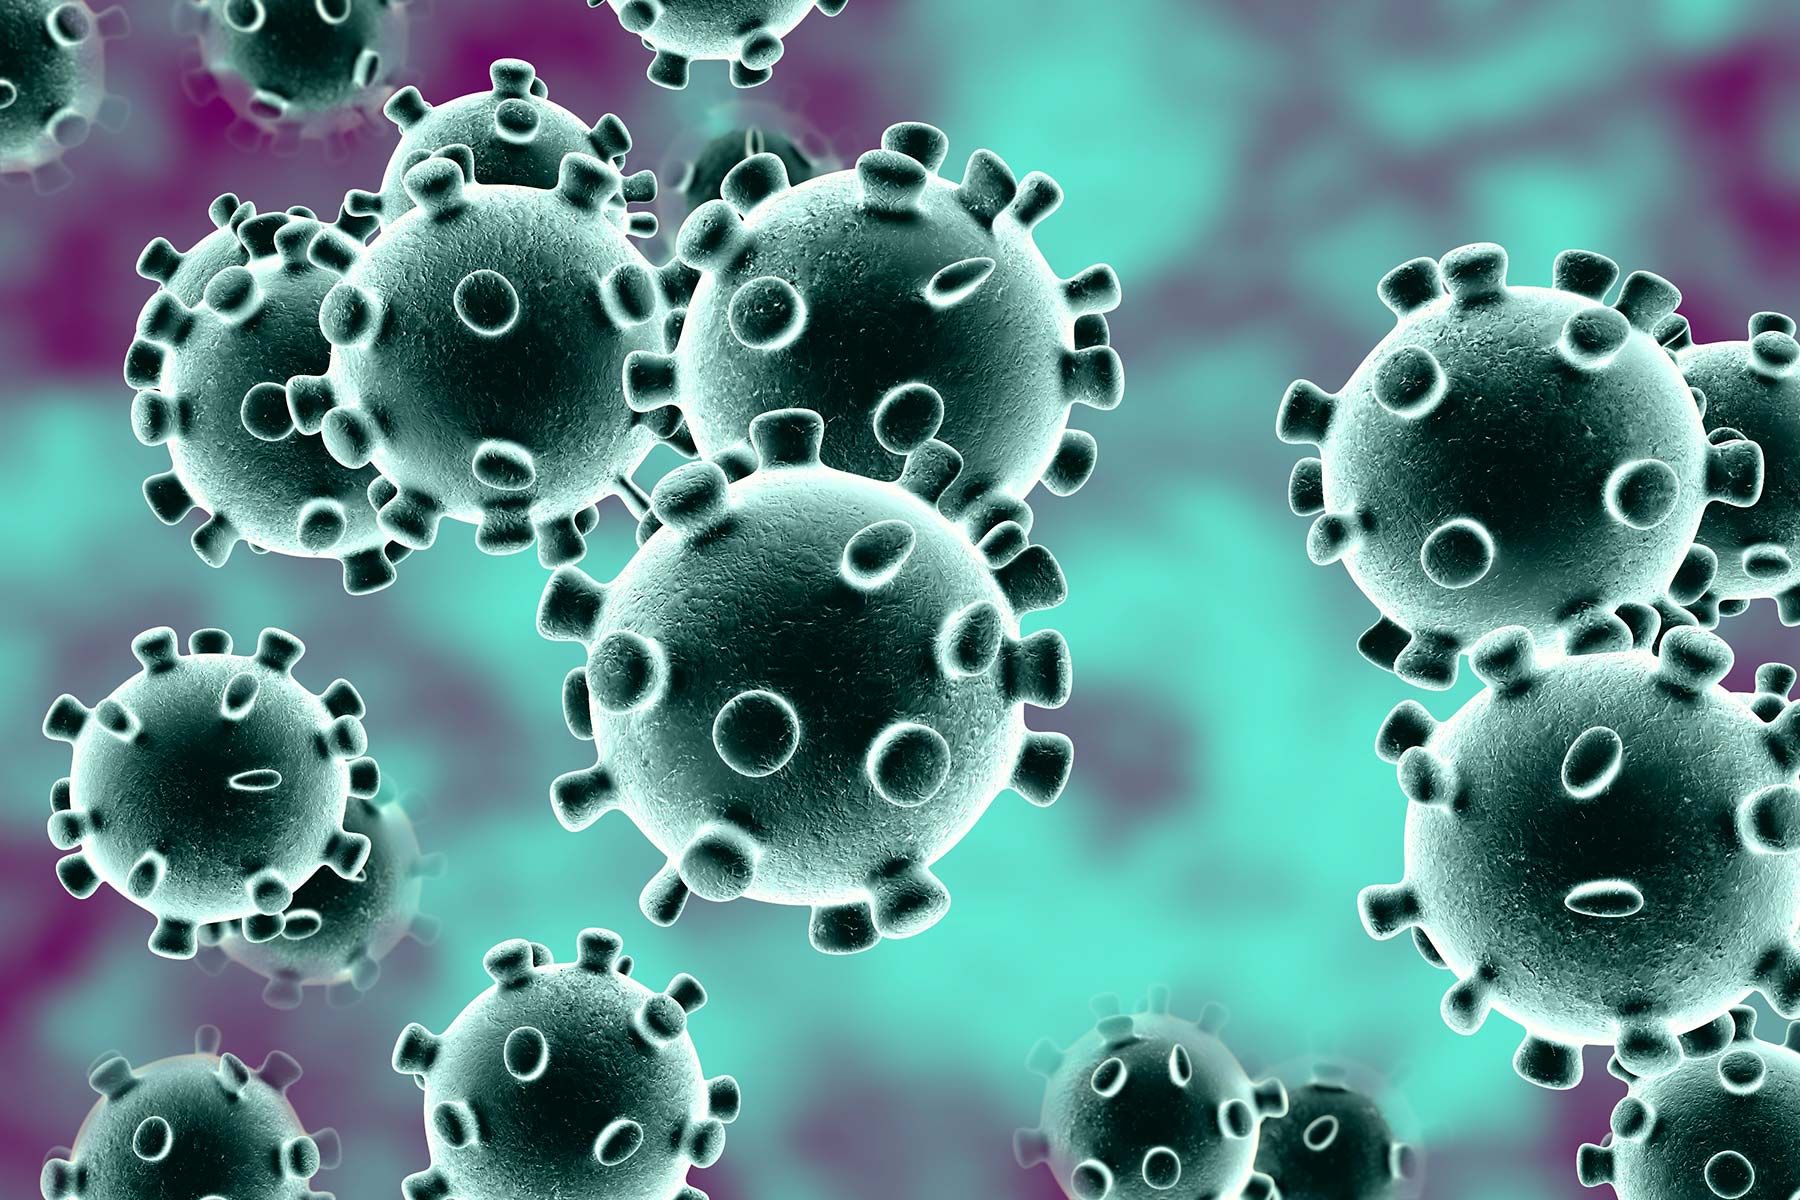 When Will There Be a Coronavirus Vaccine?